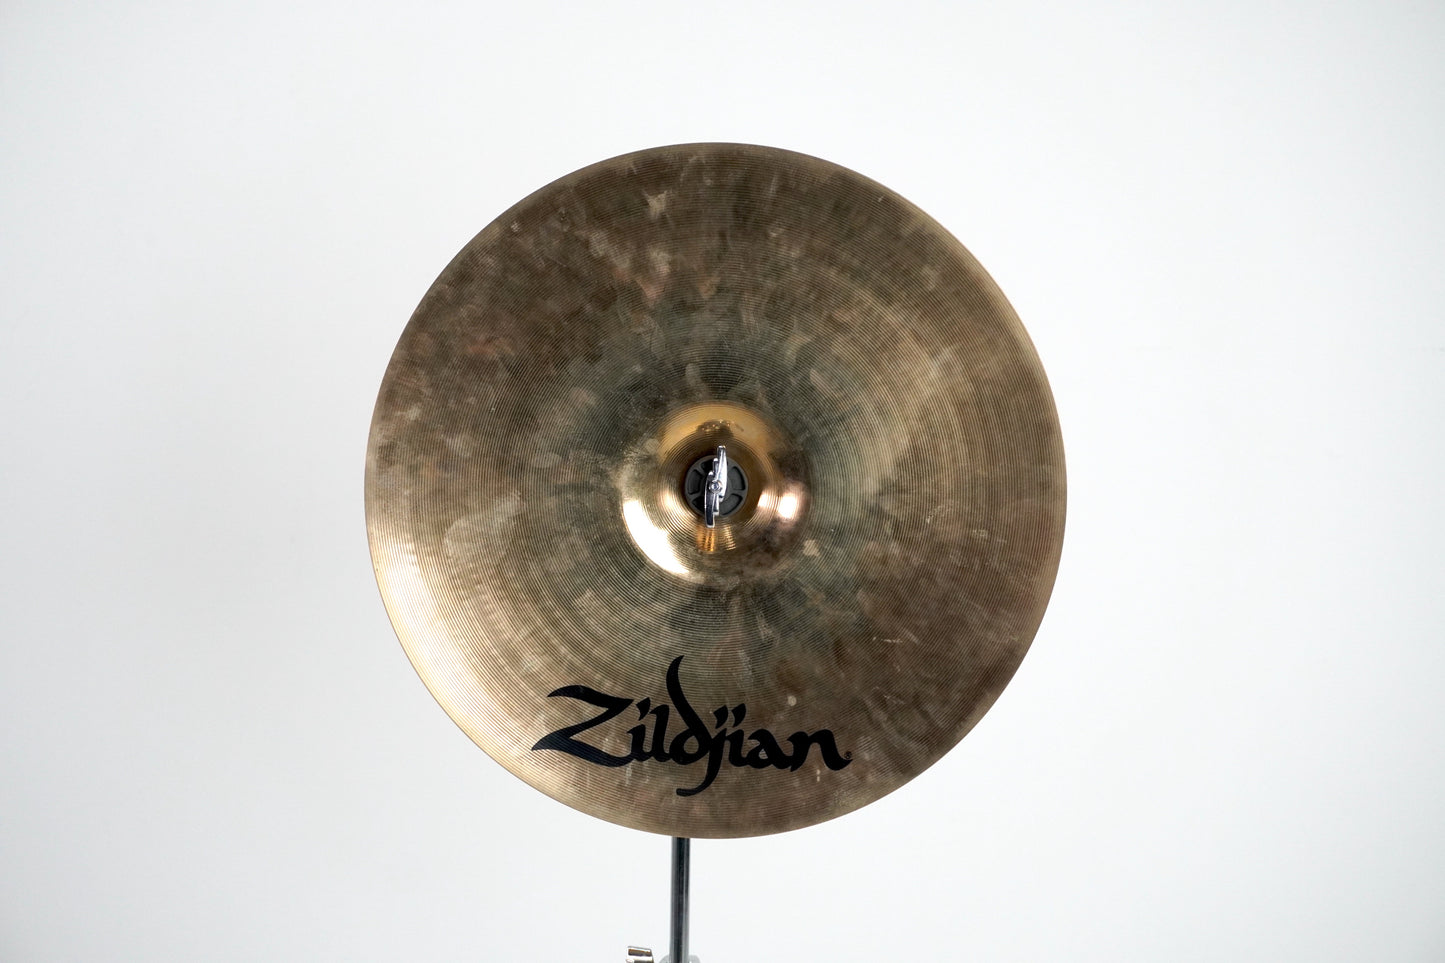 Zildjian Avedis Custom Series 16” Crash